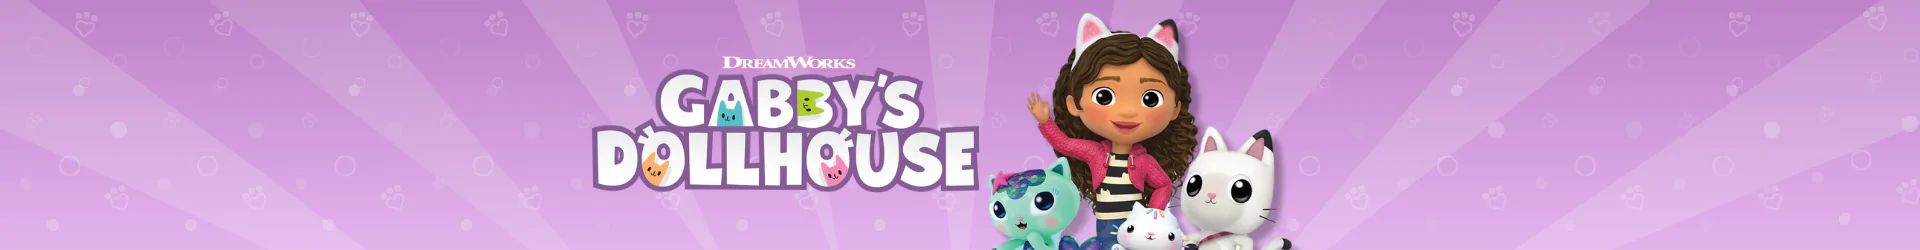 Gabbys Dollhouse pajamas banner